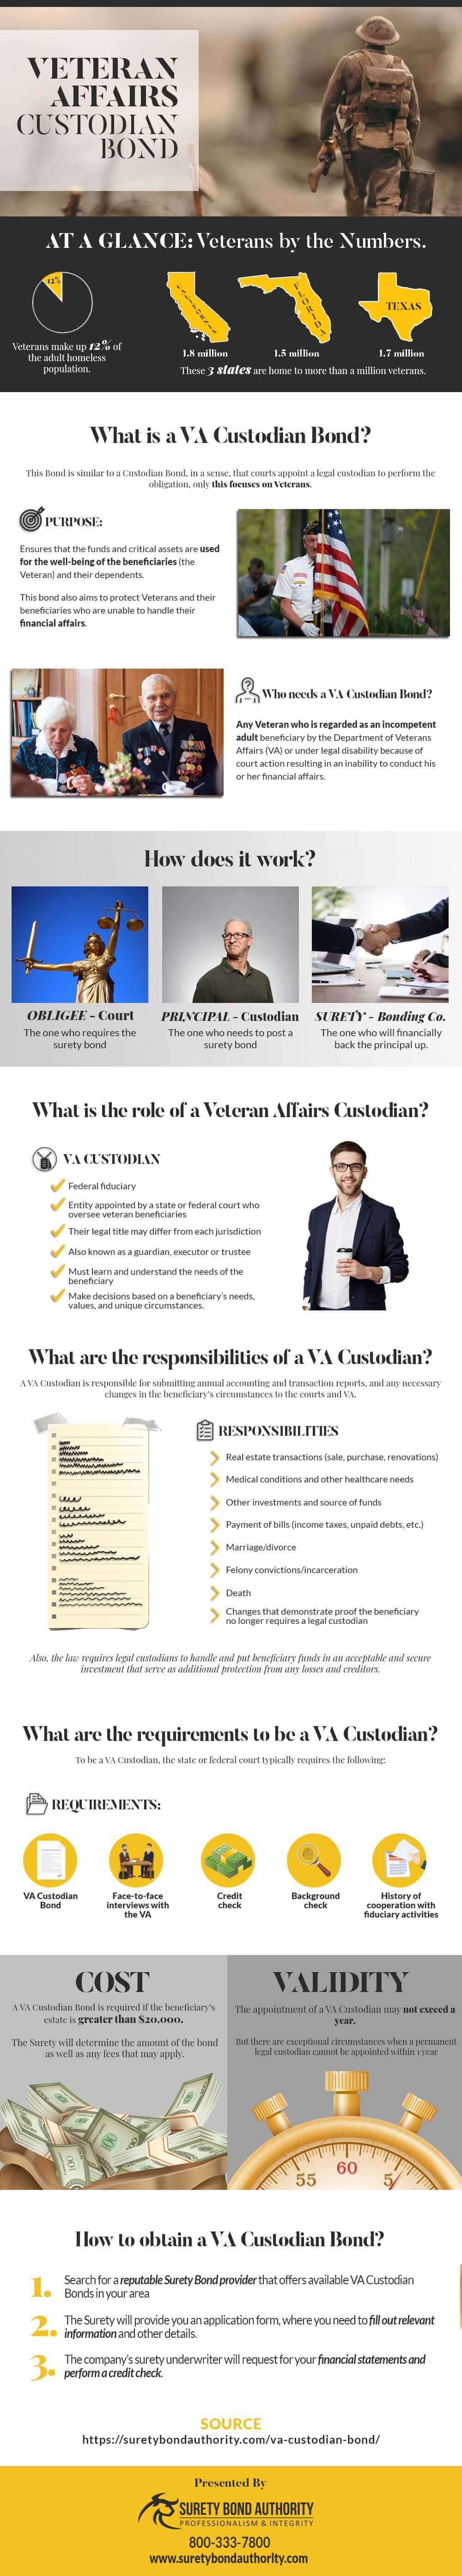 VA Custodian Bond Infographic